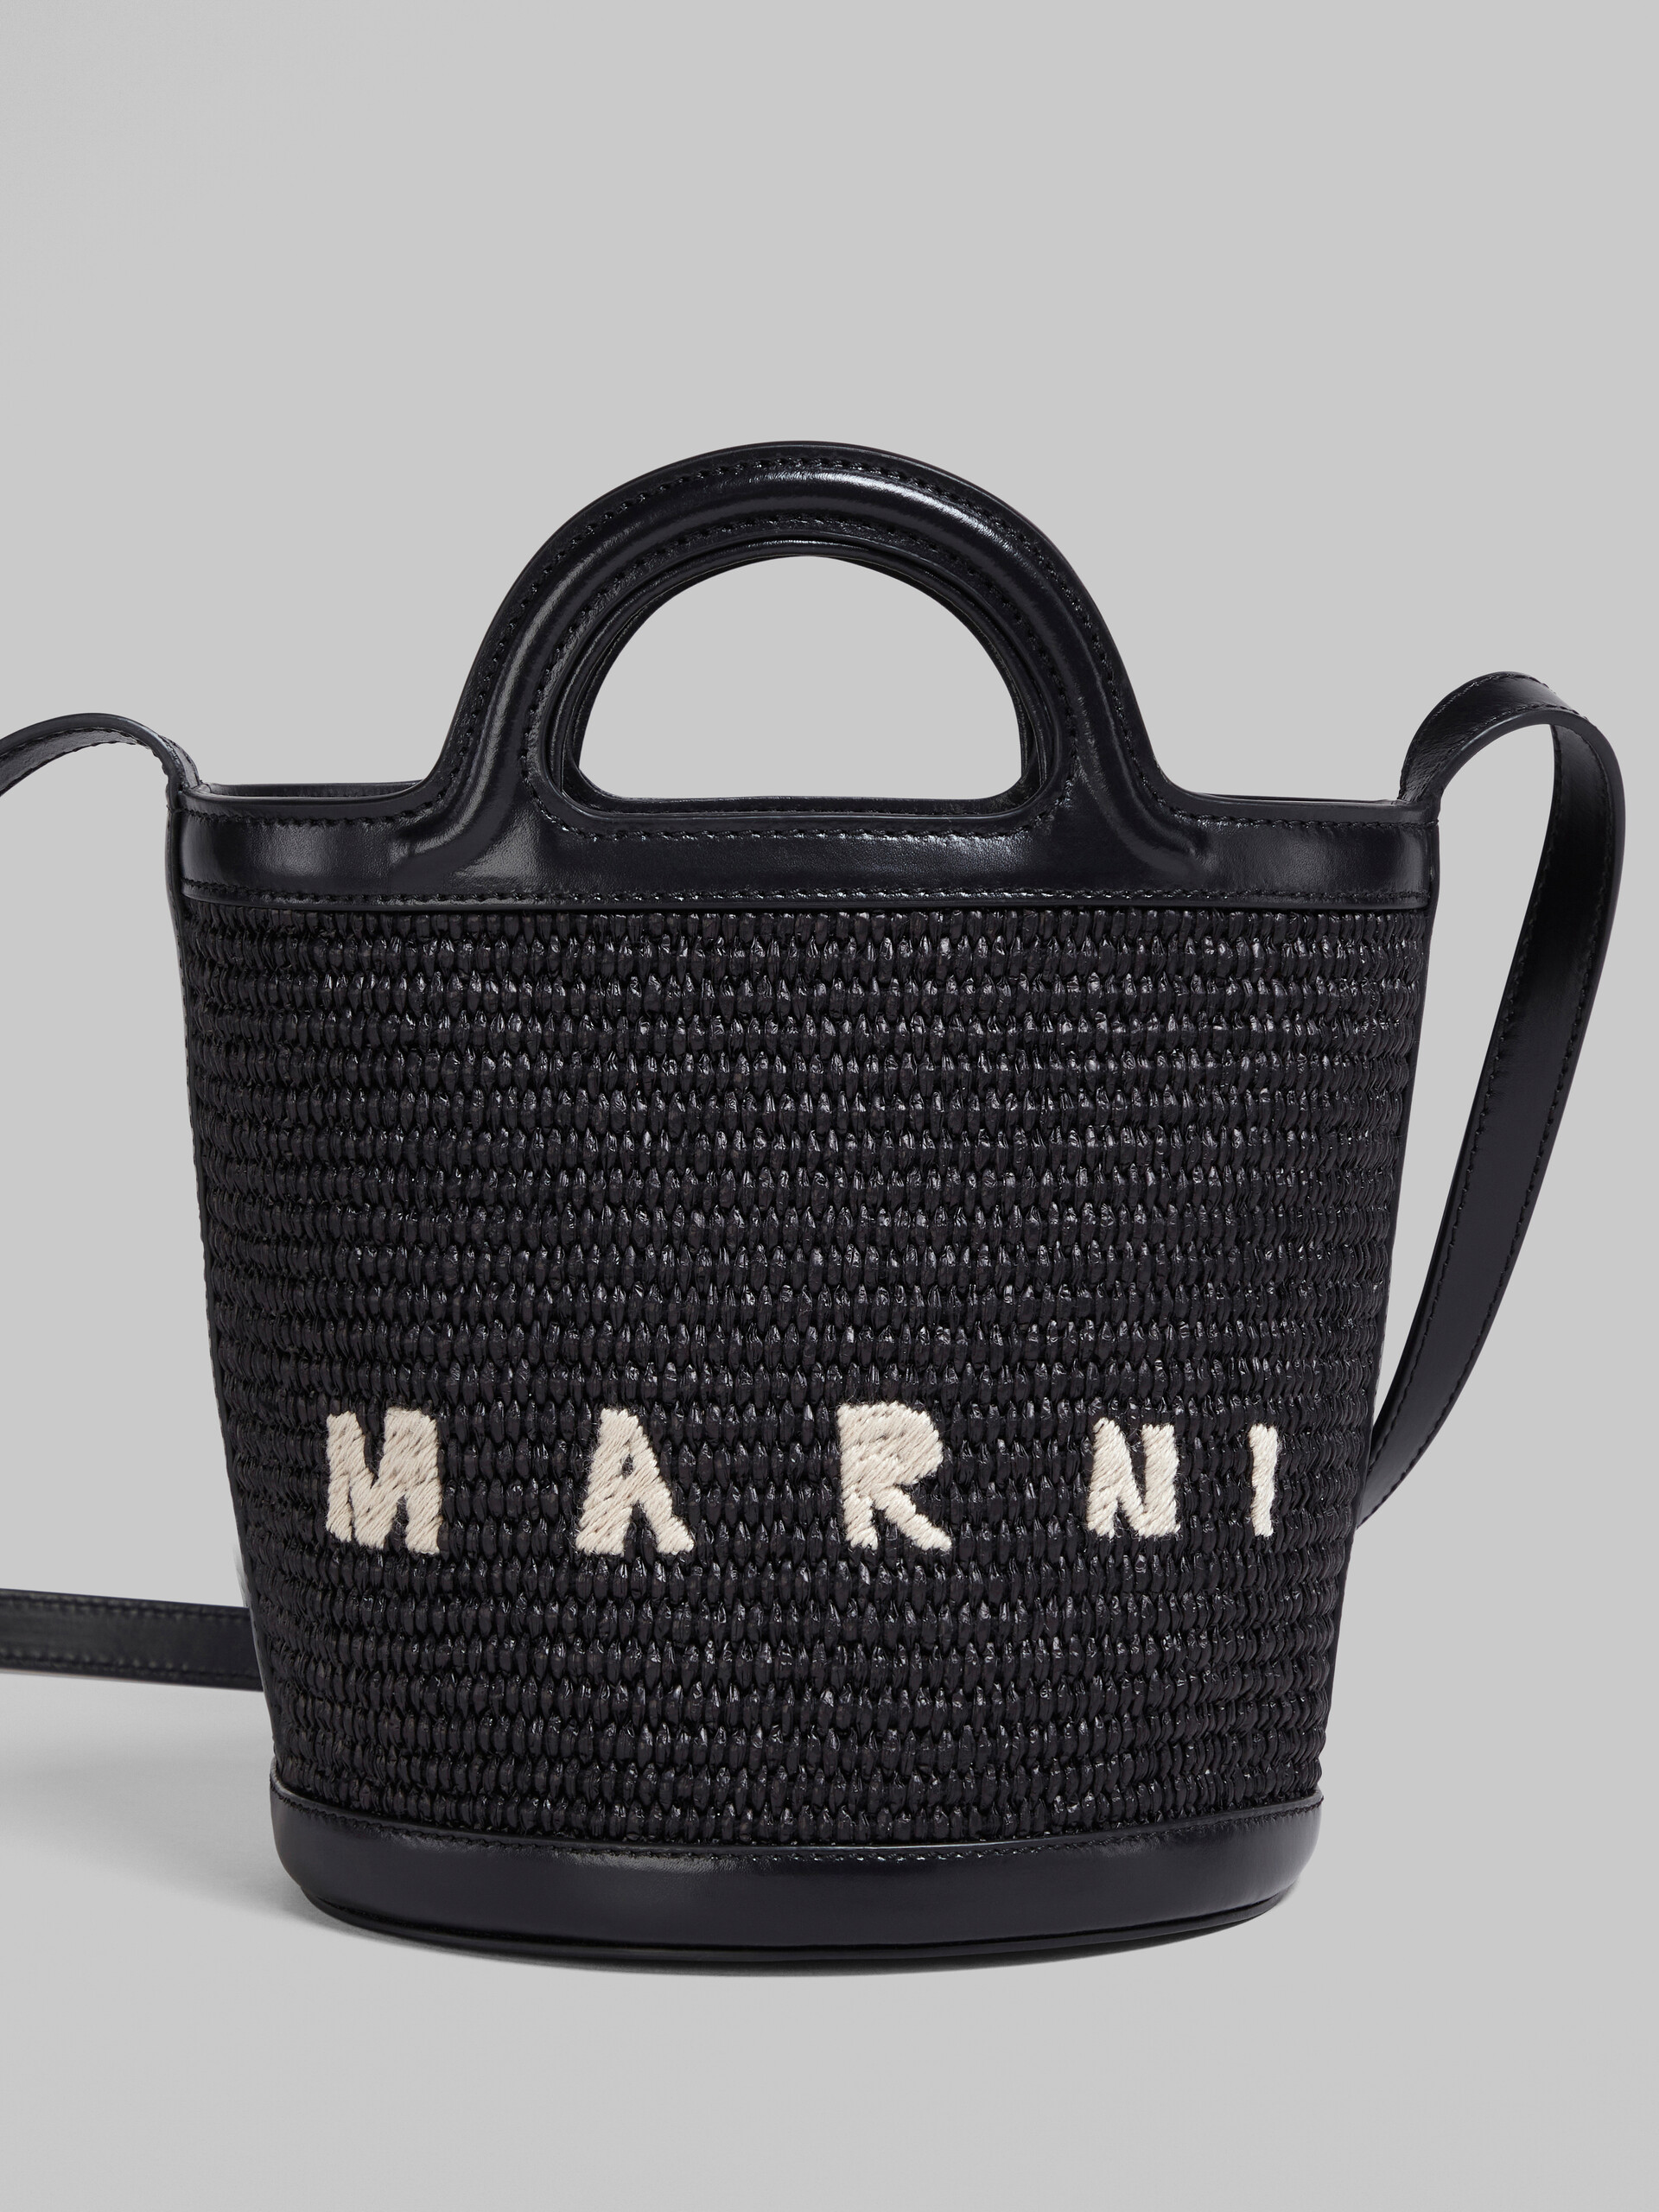 TROPICALIA mini bucket bag in black leather and raffia - Shoulder Bag - Image 5